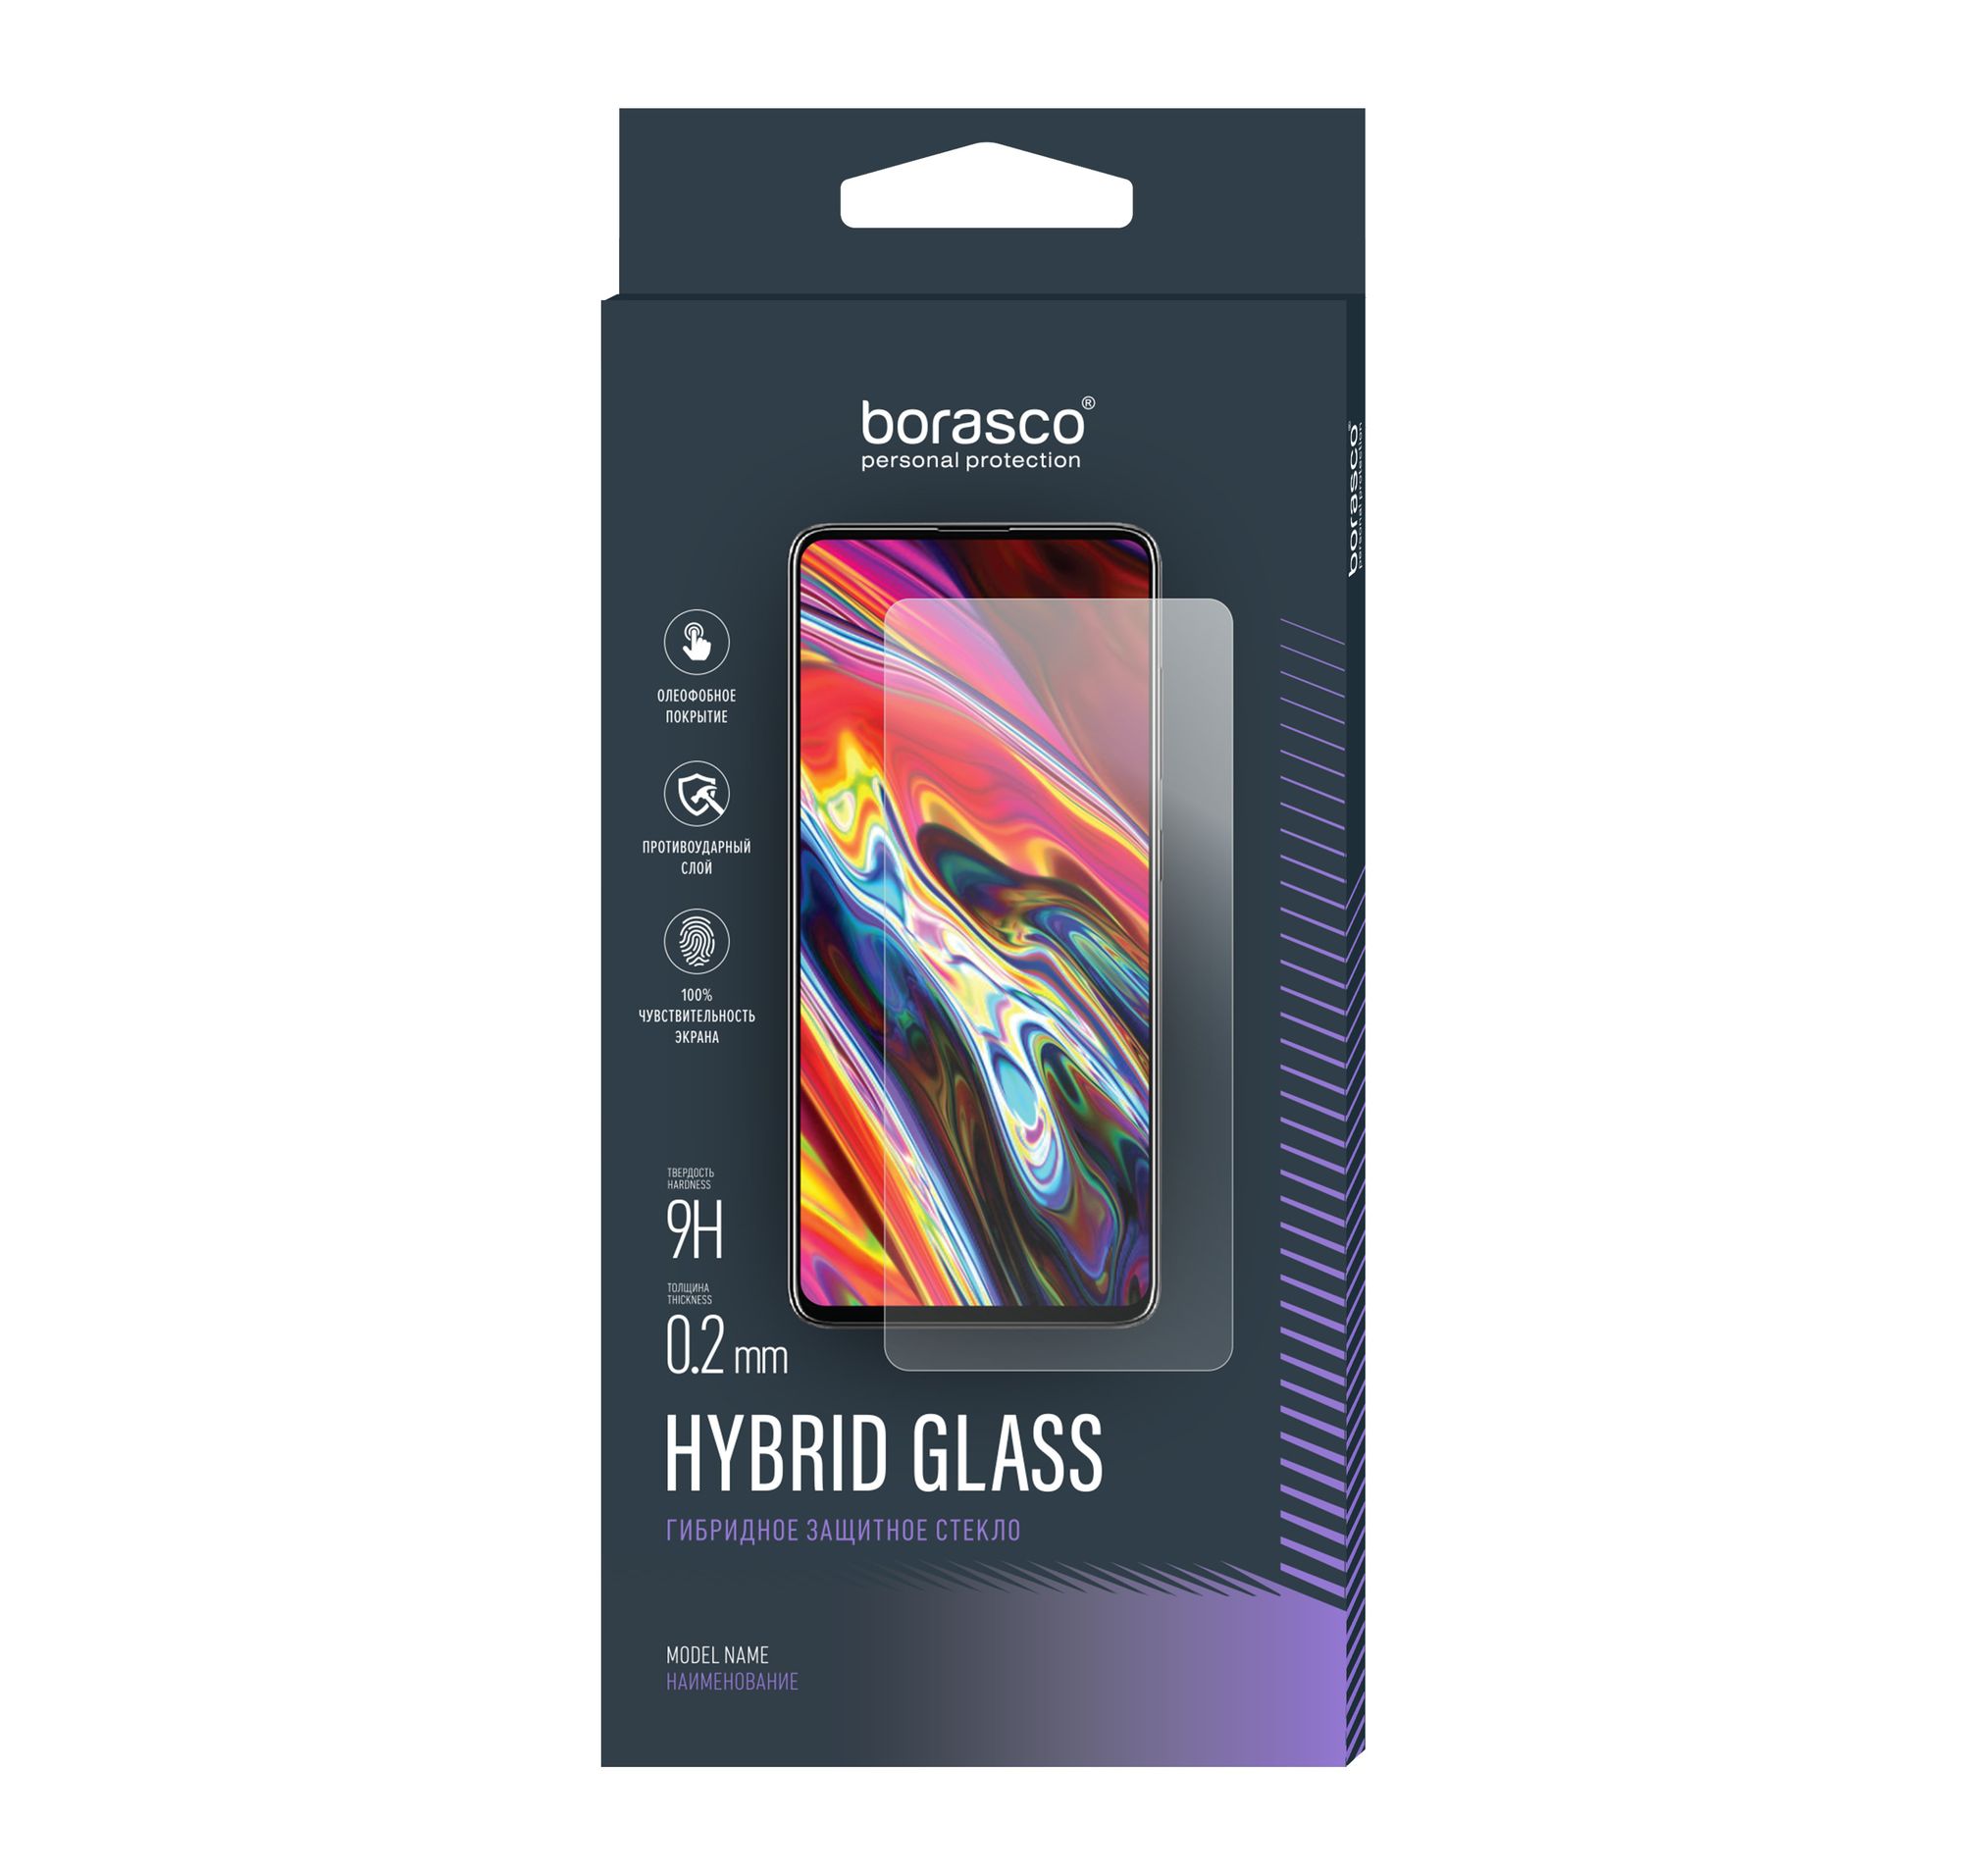 Стекло защитное Hybrid Glass VSP 0,26 мм для Apple iPad Pro 9.7/Air2/Air защитное стекло redline для apple ipad air air2 pro 9 7 2018 1шт ут000005067